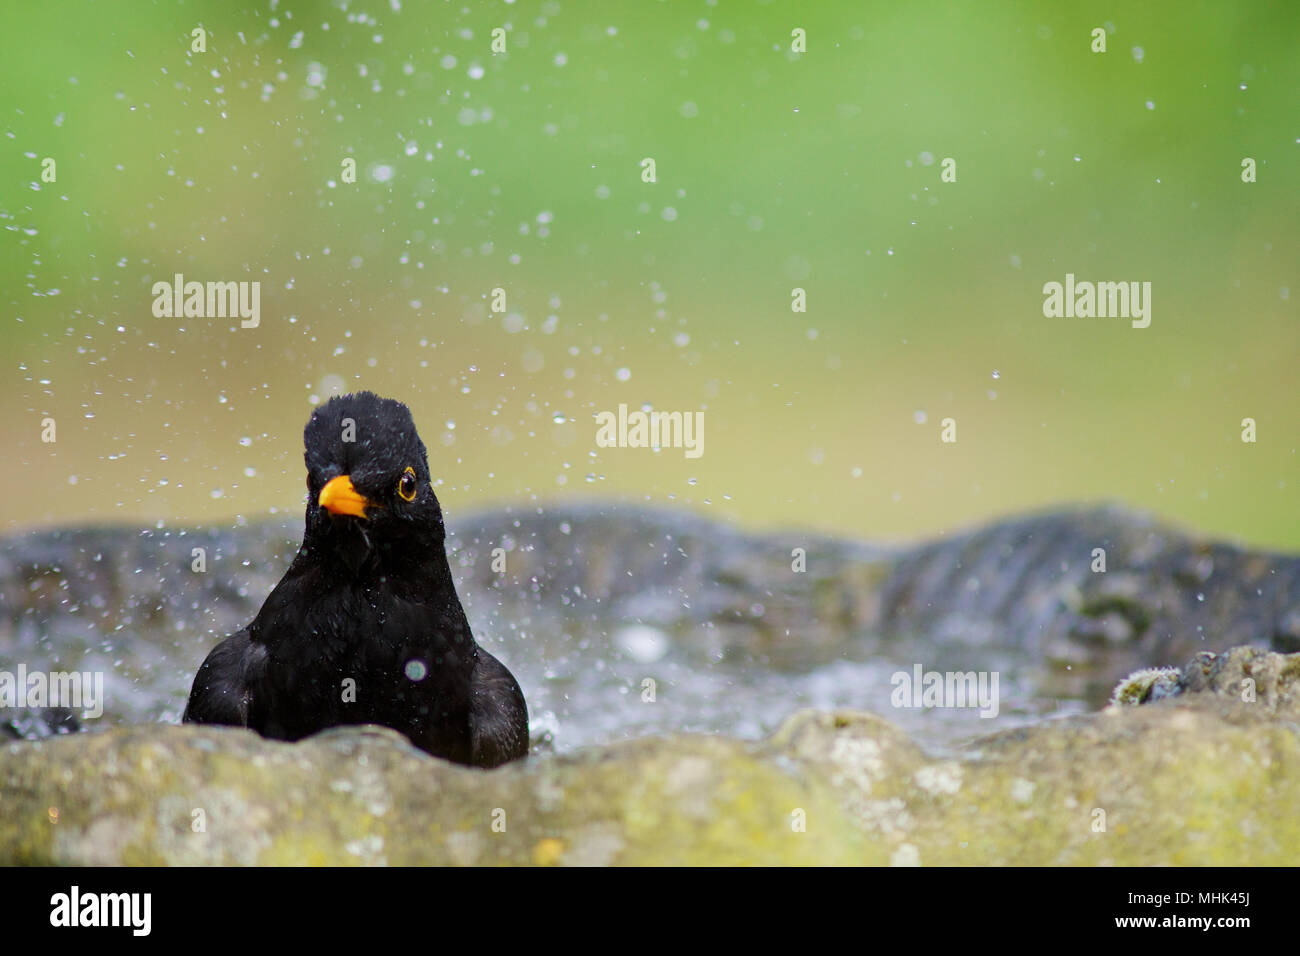 Una vista di un merlo di balneazione in un bagno di uccelli in un giardino UK Credit: Ben rettore/Alamy Stock Photo Foto Stock